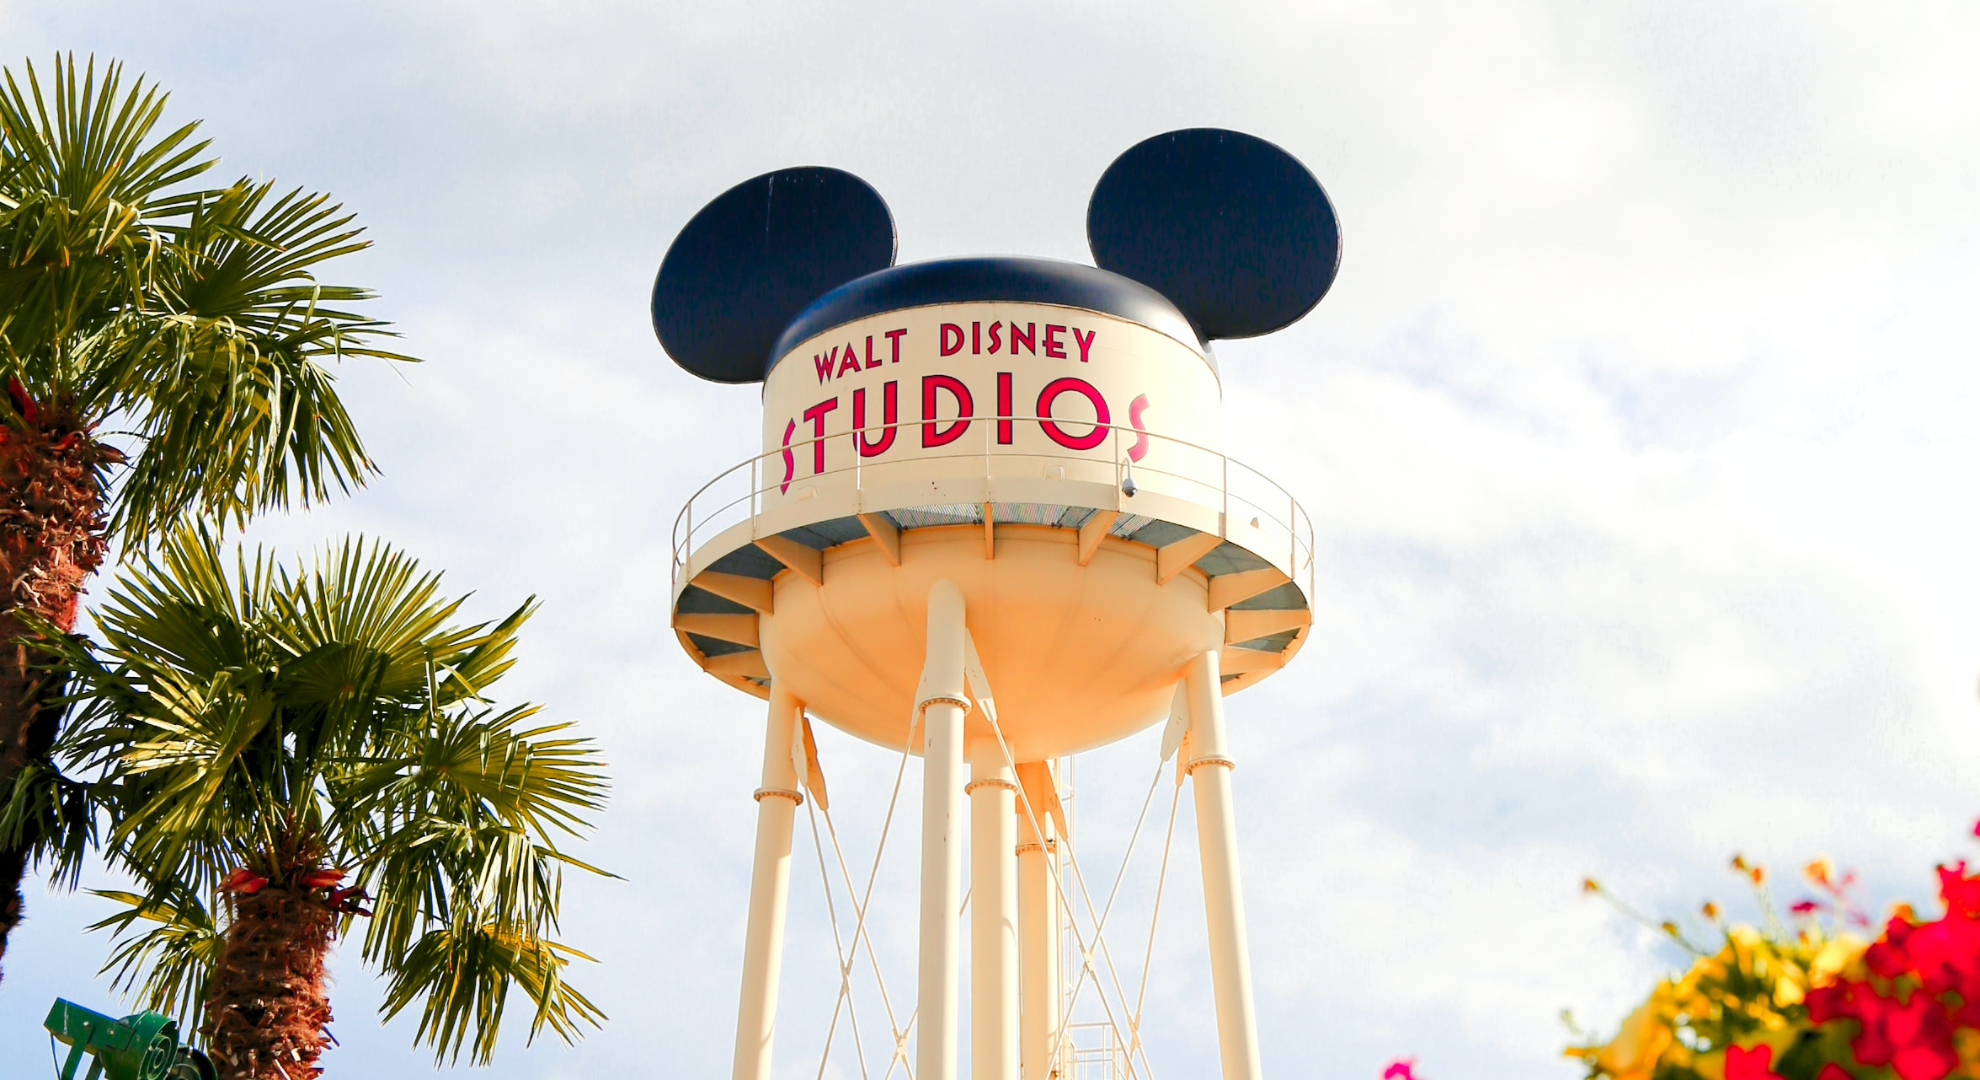 Parc Walt Disney Studios - Lydia Turner / unsplash